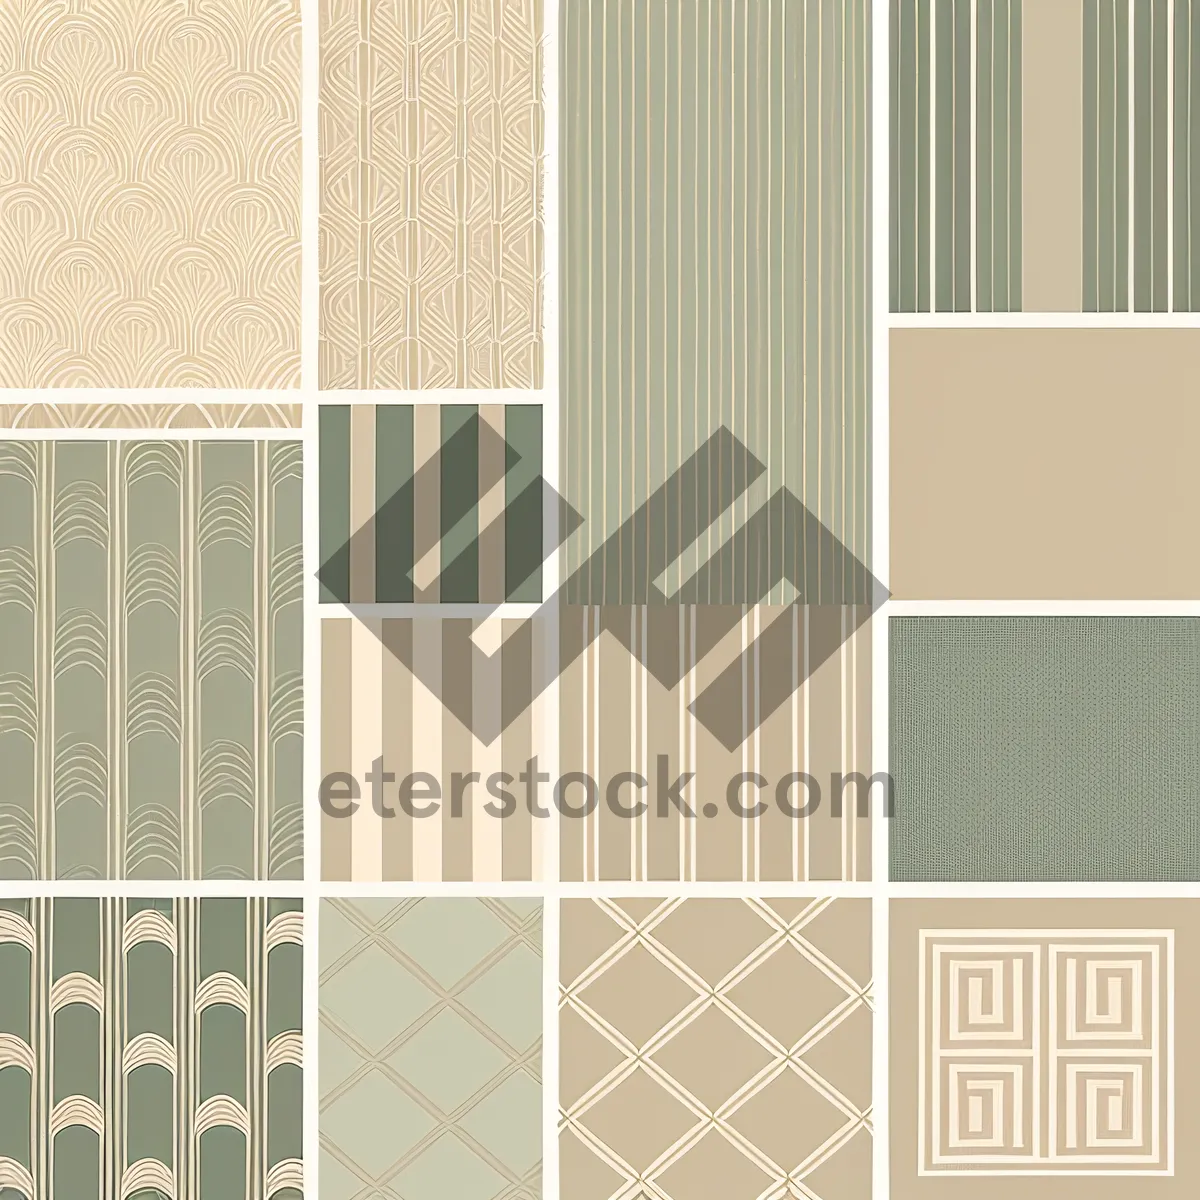 Picture of Checkered Retro Frame Design Texture